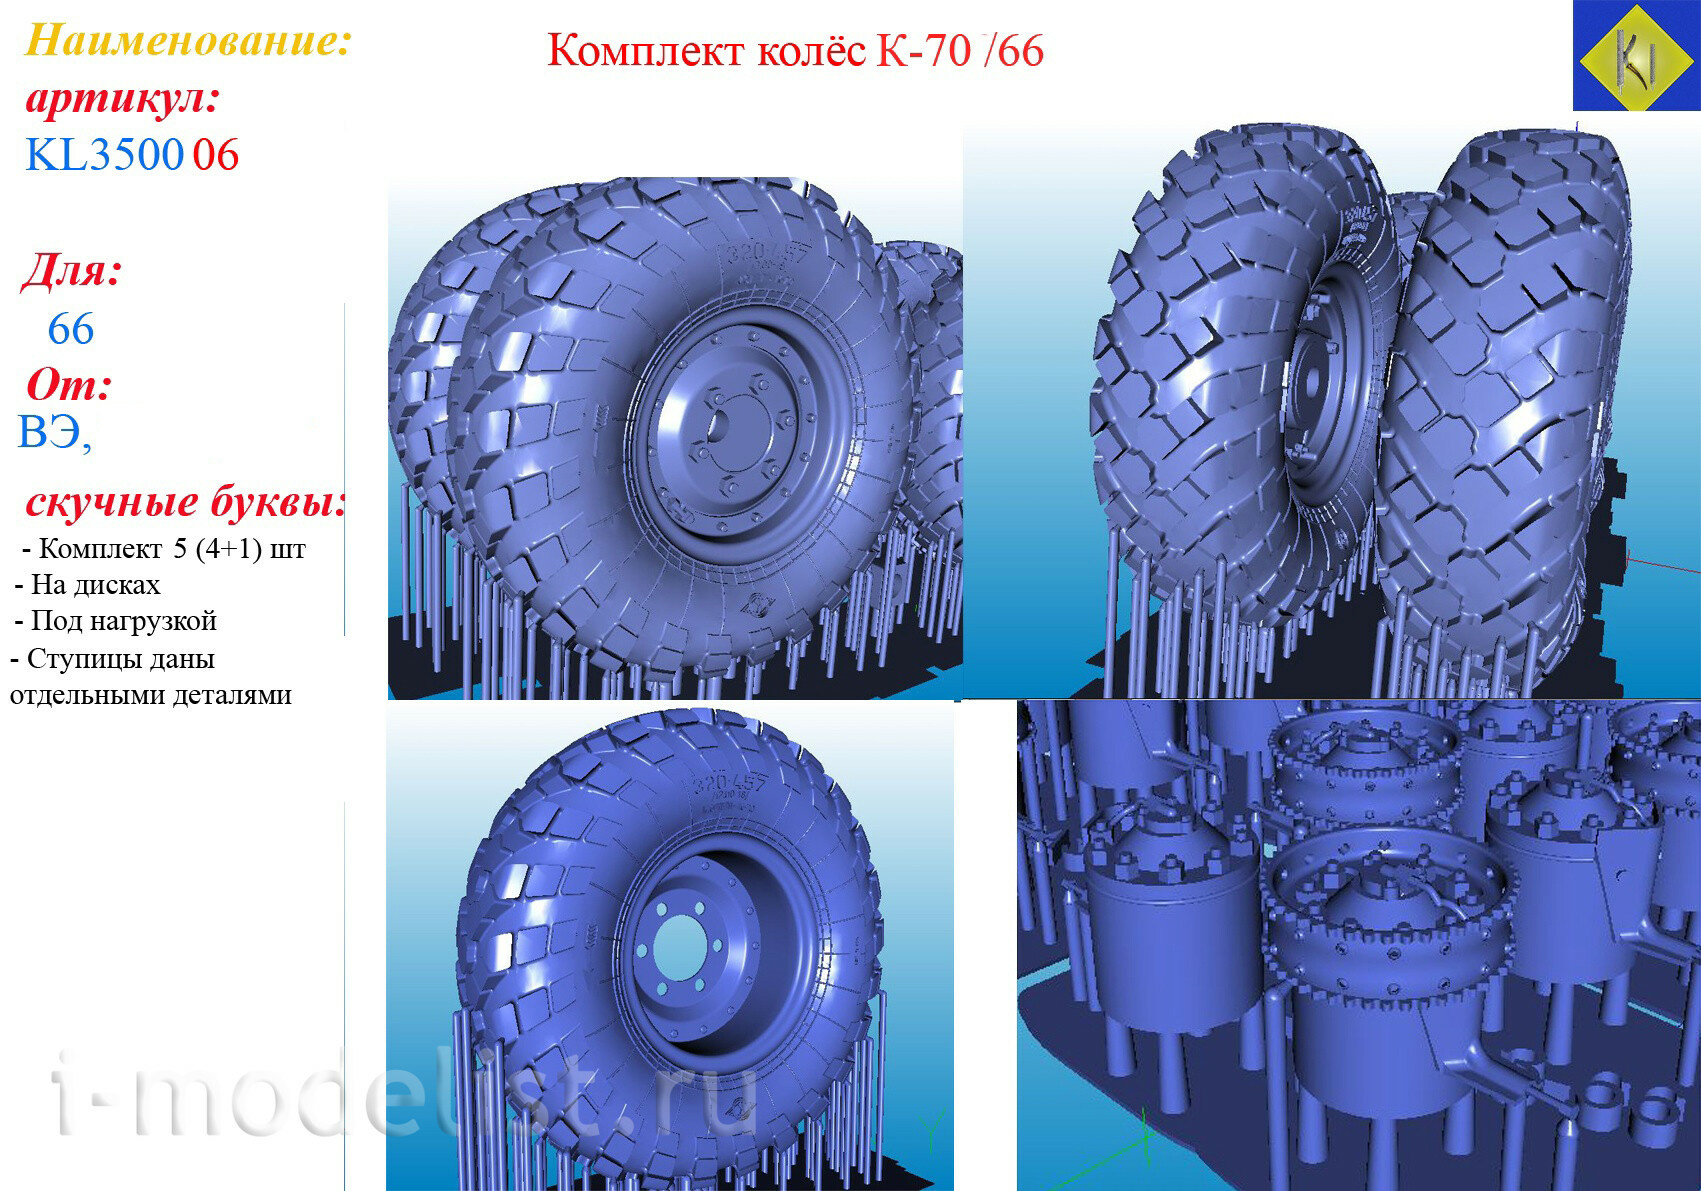 KL350006 Kraft Lab 1/35 Set of wheels K-70 /66